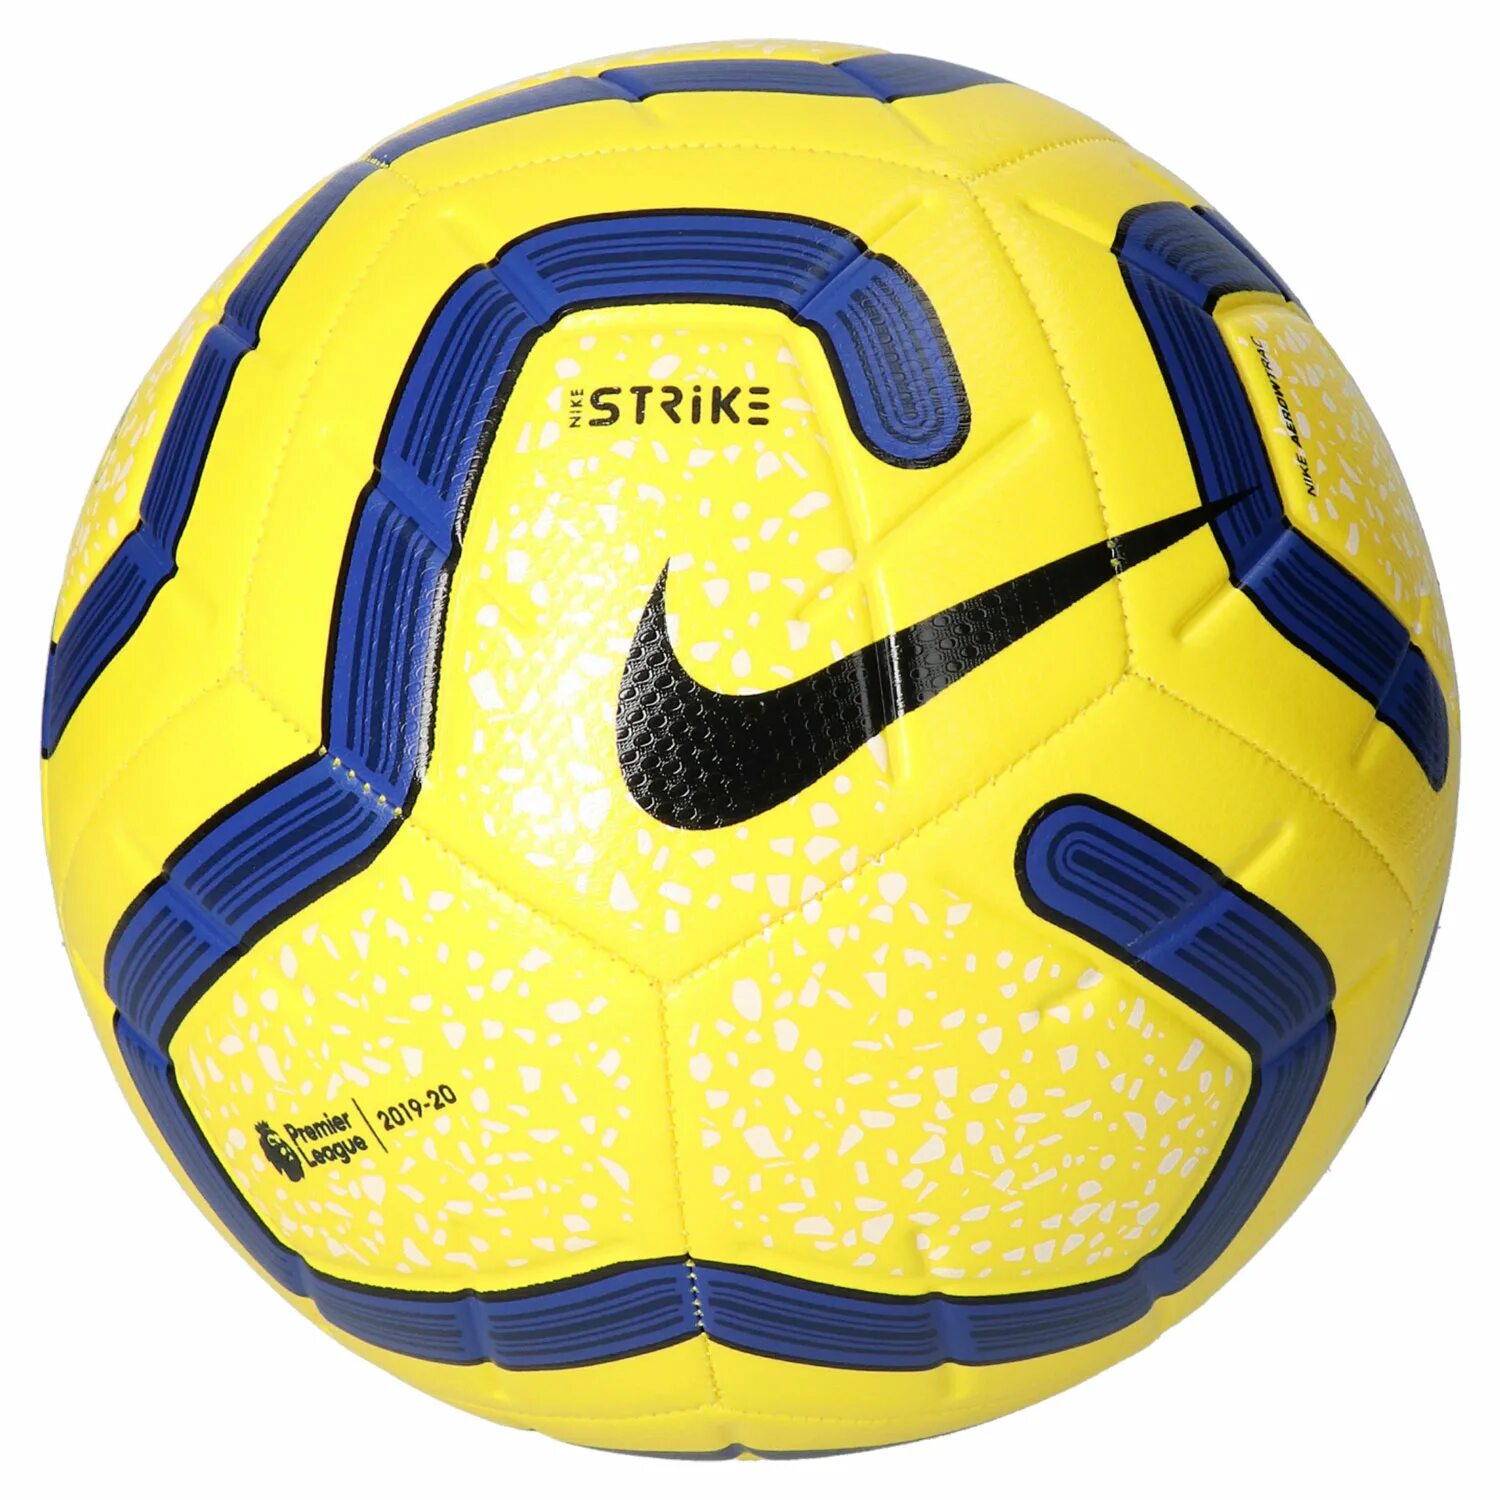 Мячи размер 5 купить. Футбольный мяч Nike Strike-fa19. Мяч найк футбольный Size 4. Мяч футбольный Nike Strike (5). Мяч 5 размер Nike Strike fa12.